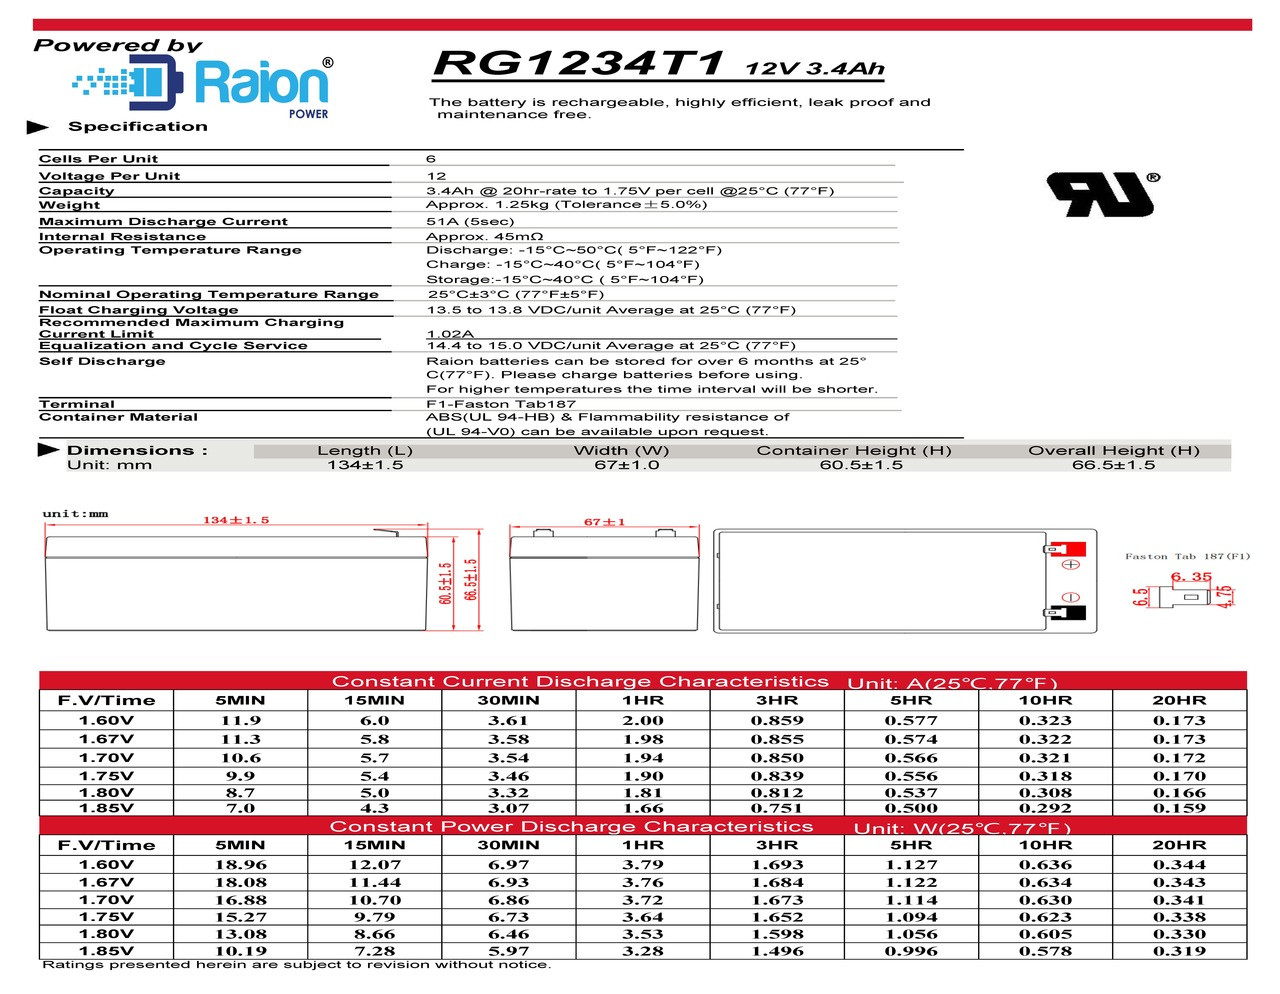 Raion Power RG1234T1 12V 3.4Ah Battery Data Sheet for Park Medical Electronics Lab 1051 Mini Lab